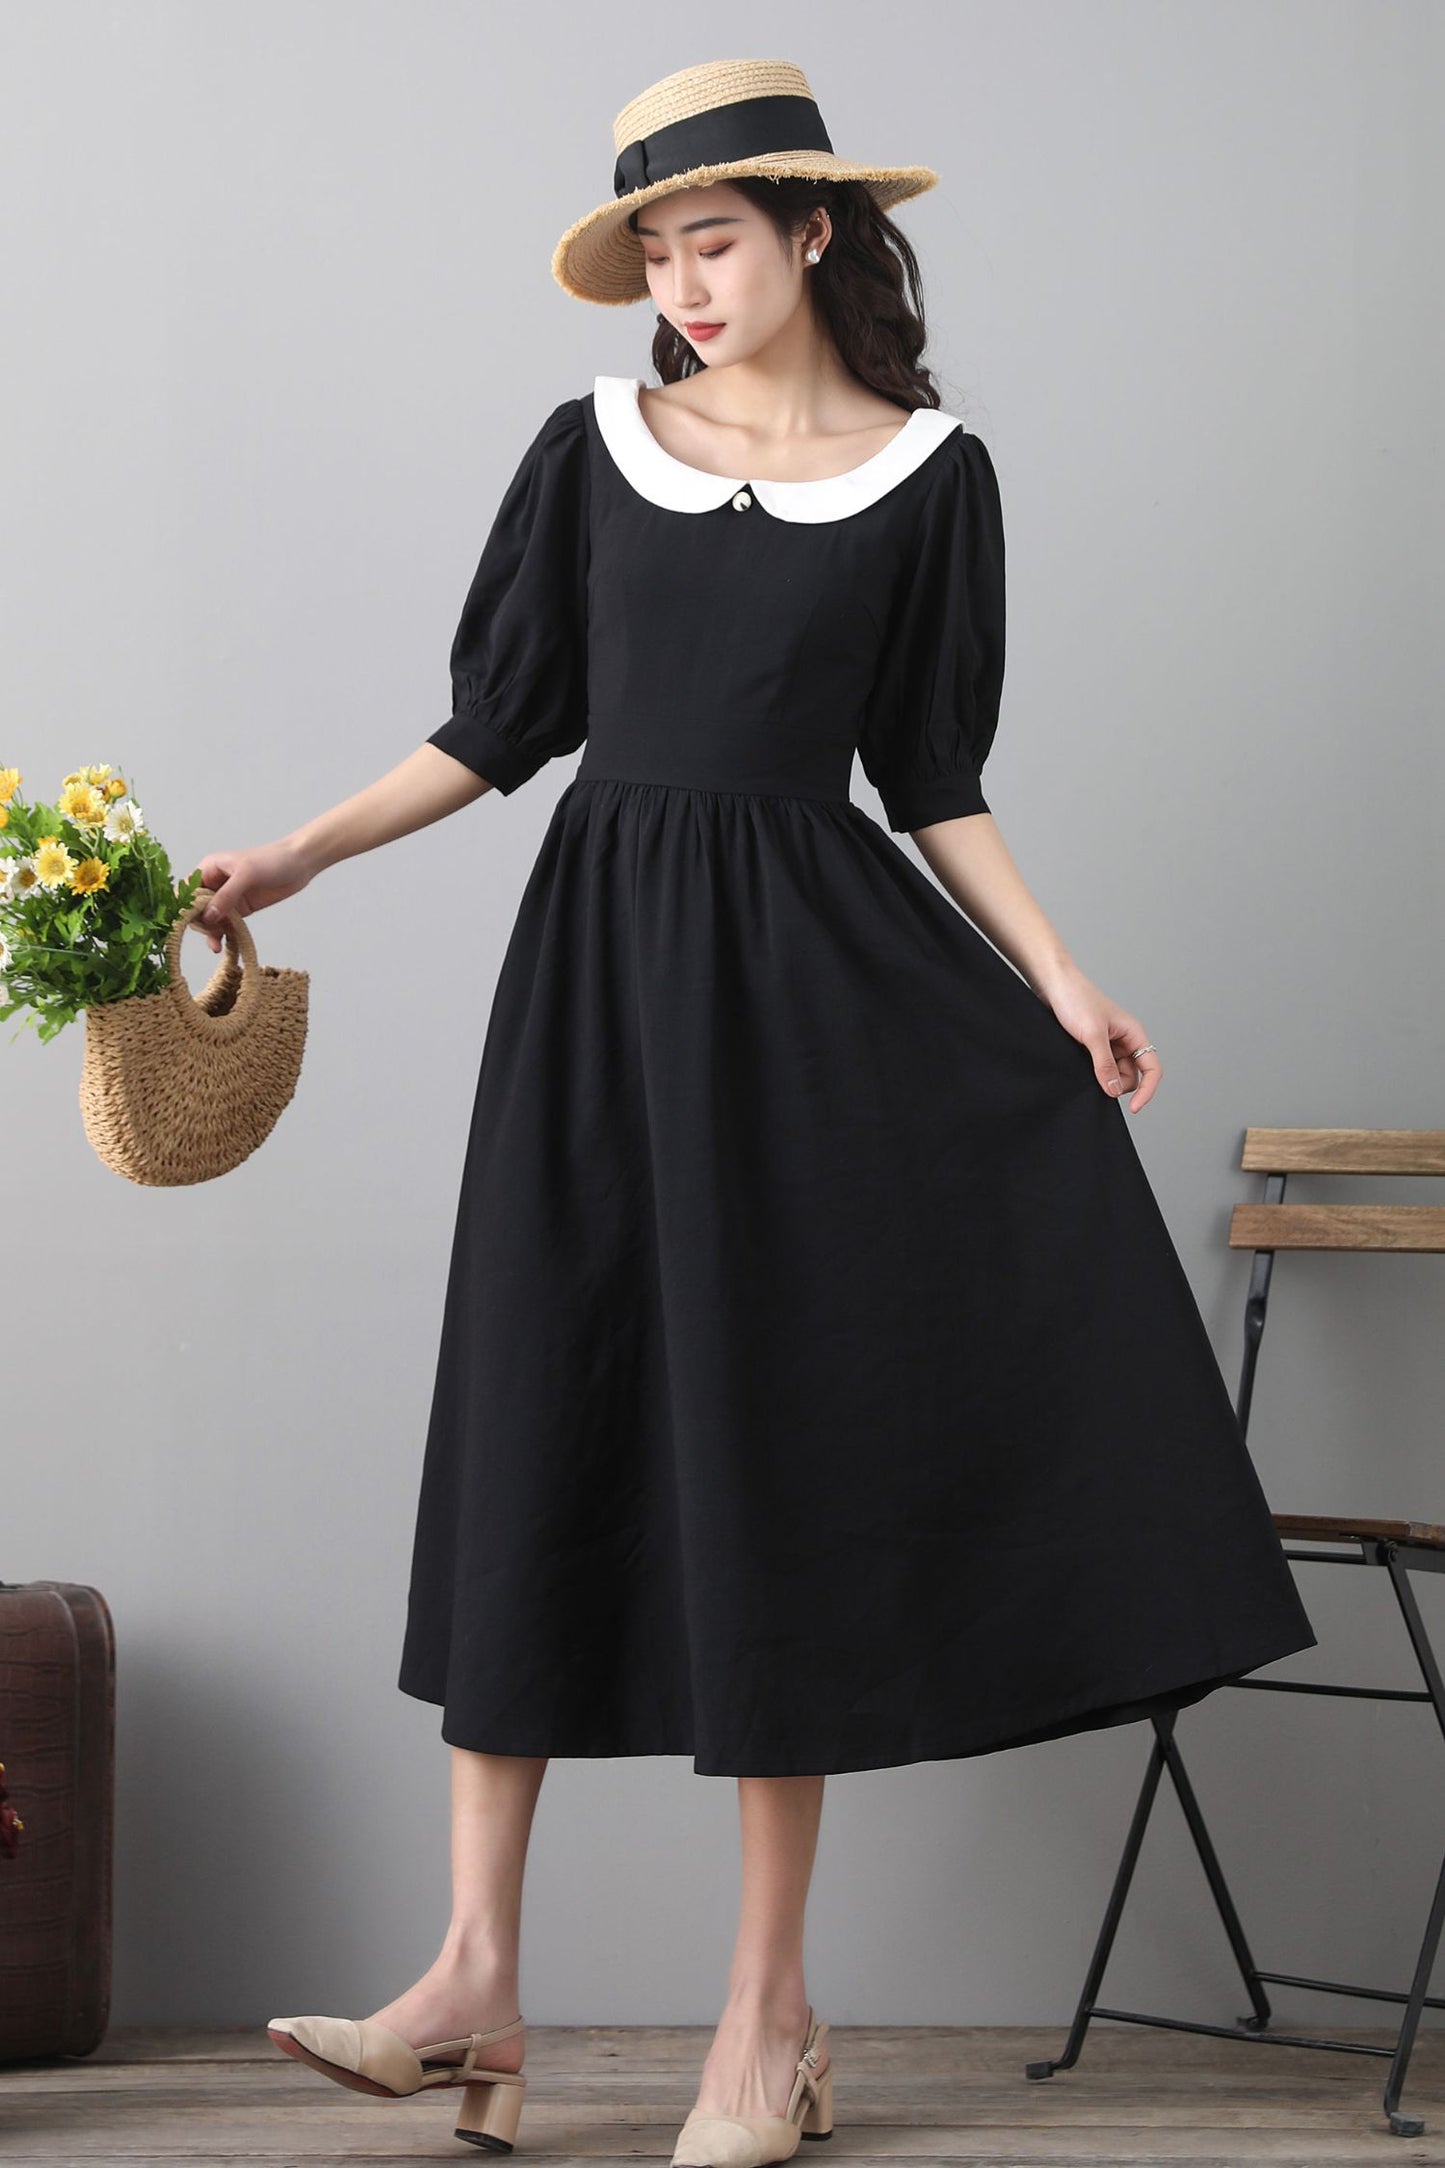 Vintage inspired cotton linen dress 2559